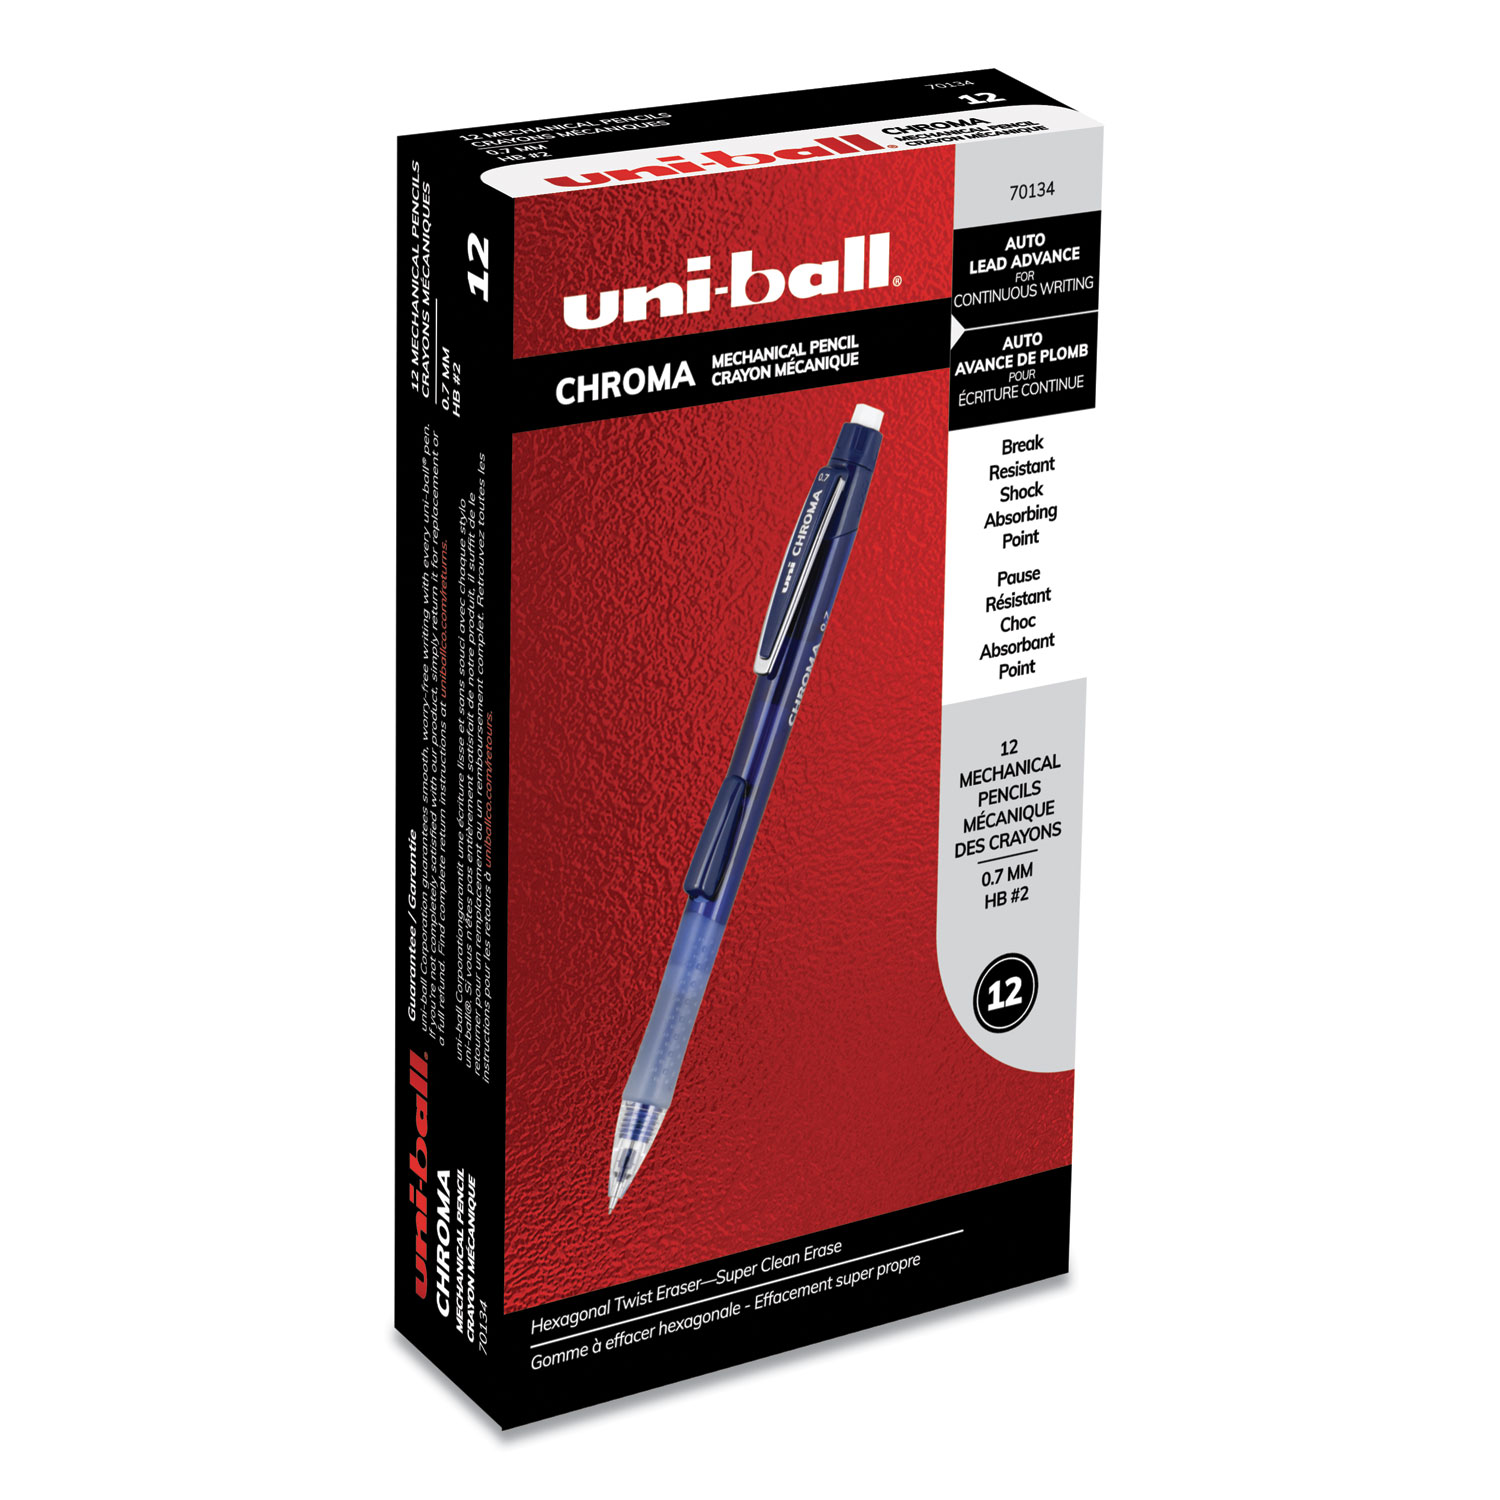  uni-ball 70134 Chroma Mechanical Pencil, 0.7 mm, HB (#2), Black Lead, Cobalt Barrel, Dozen (UBC70134) 